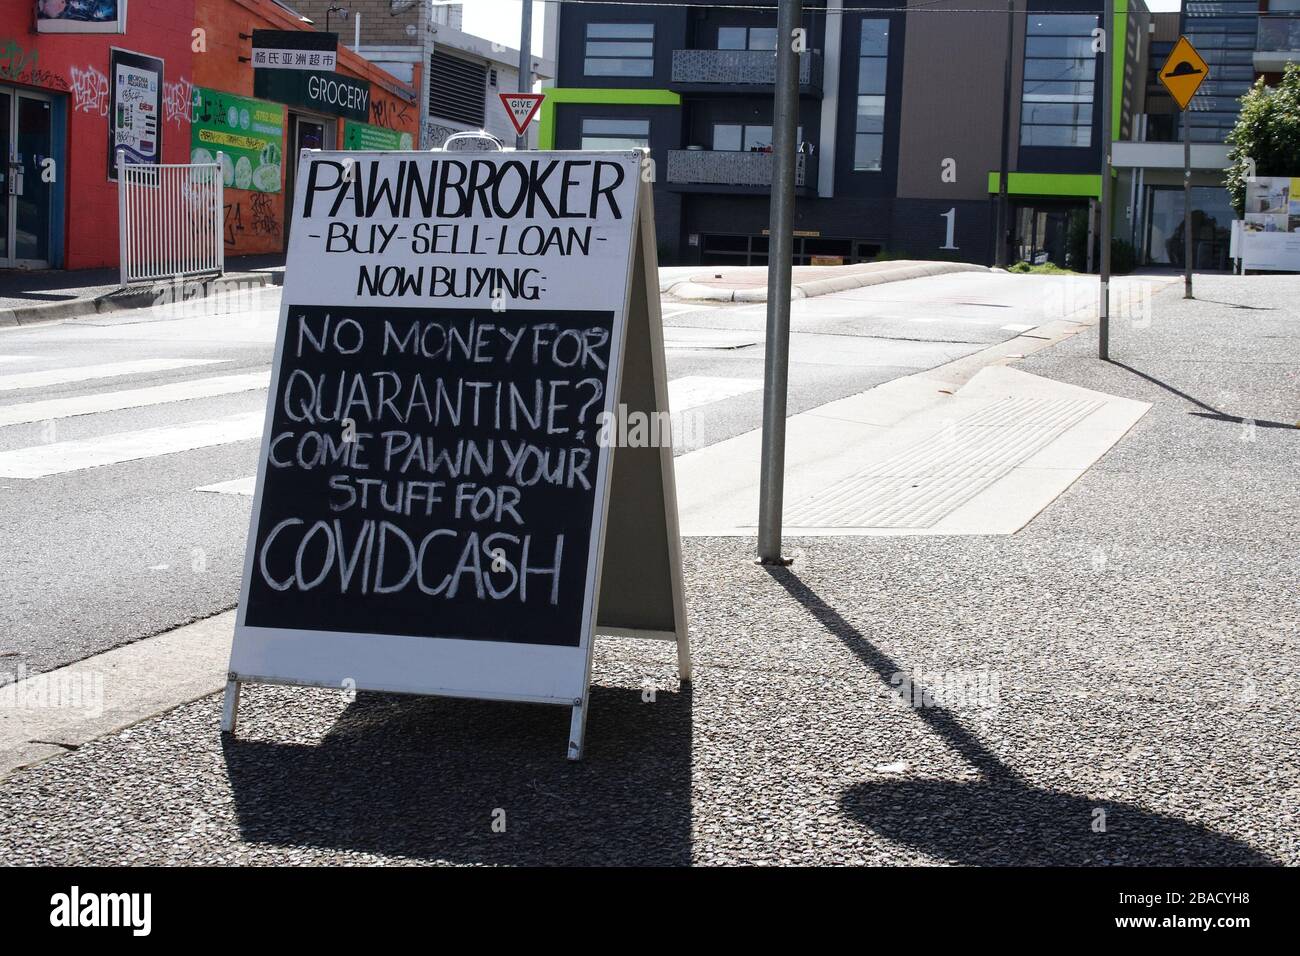 Pawnbroker sign during Corona Virus Pandemic, Mar 27, 2020. Boronia, Victoria, Australia. Stock Photo